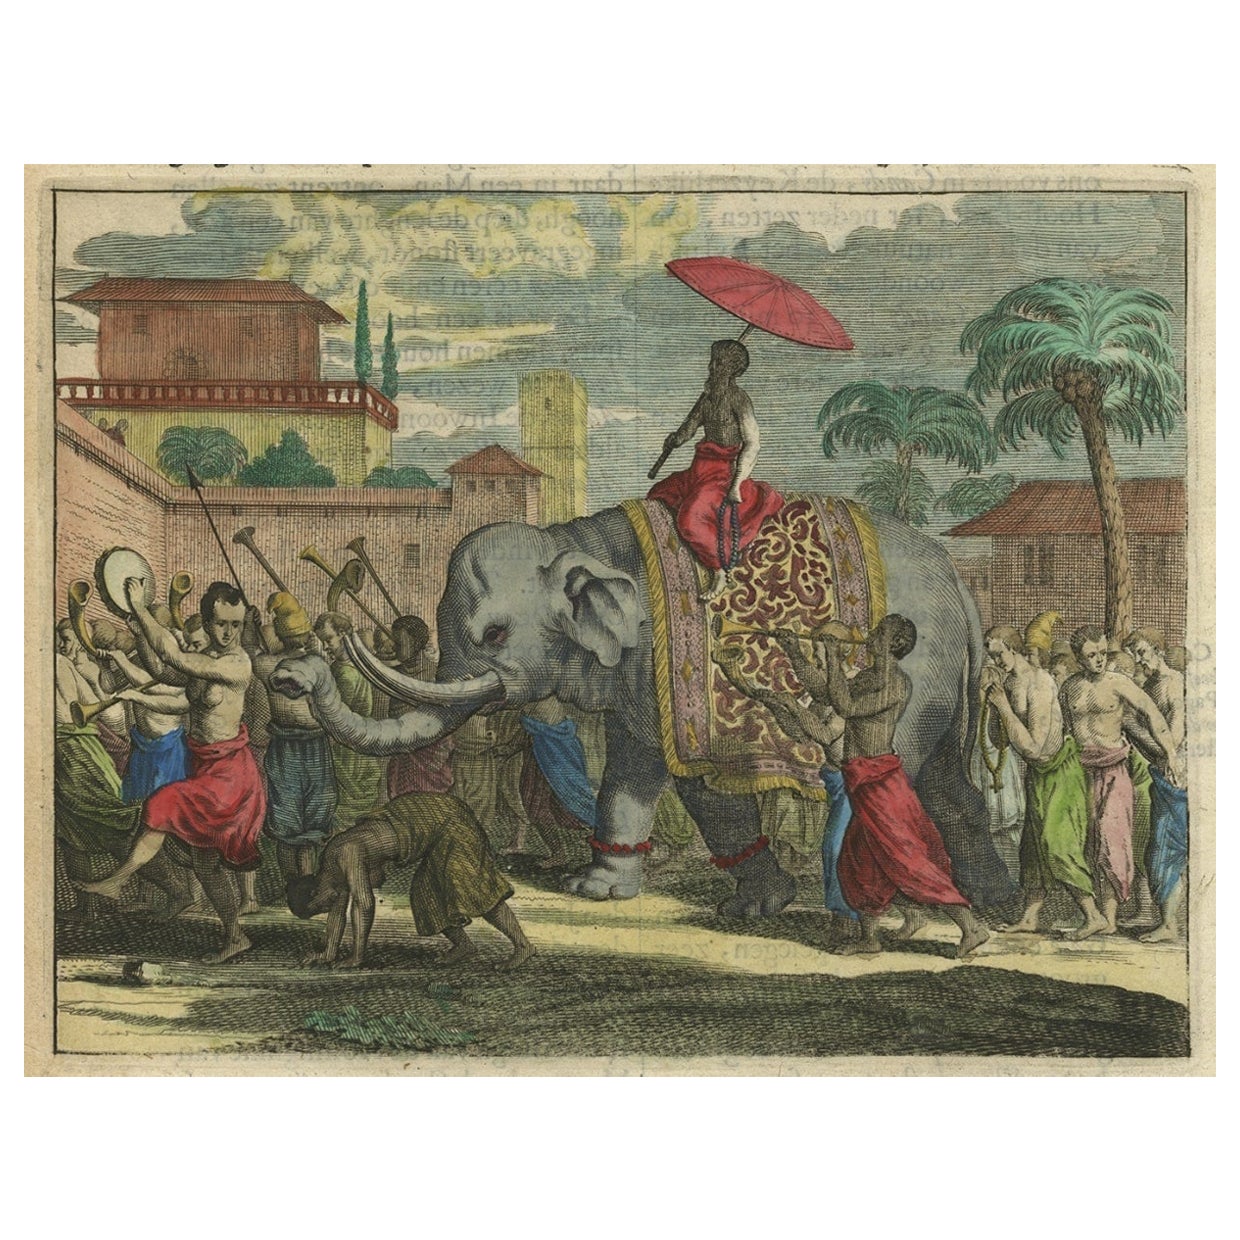 Original Antique Print of a Procession of Monks in Ceylon 'Sri Lanka', 1672